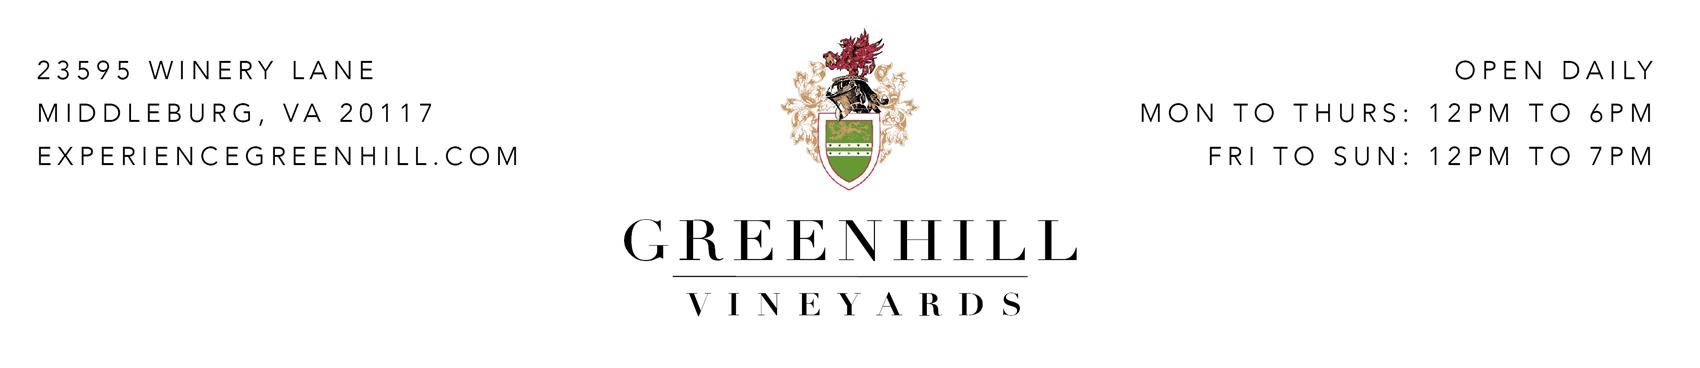 Greenhill Winery & Vineyards